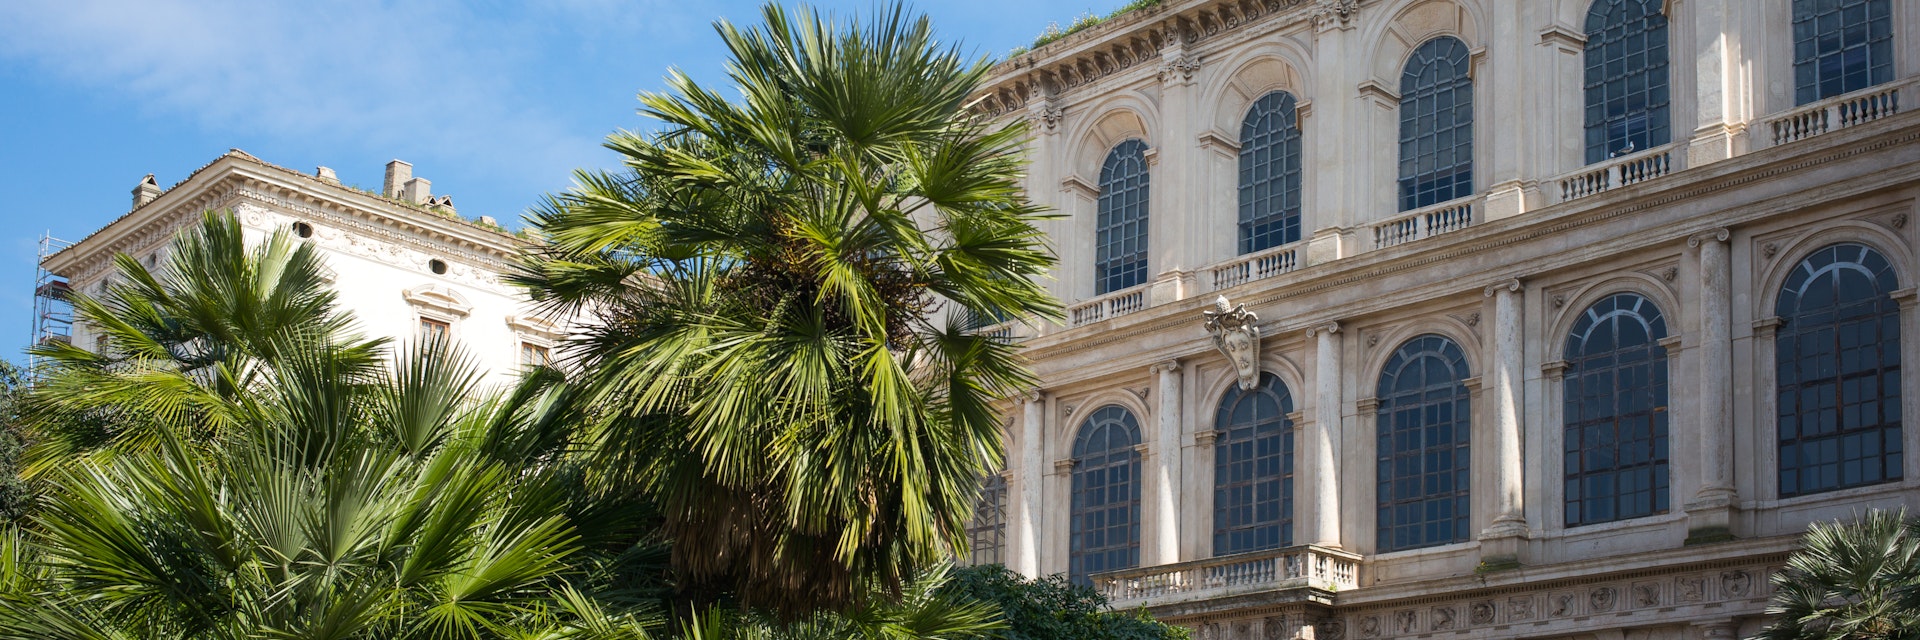 Rome, Italy - March 10, 2014: The  Palazzo Barberini facade seen from the entrance garden